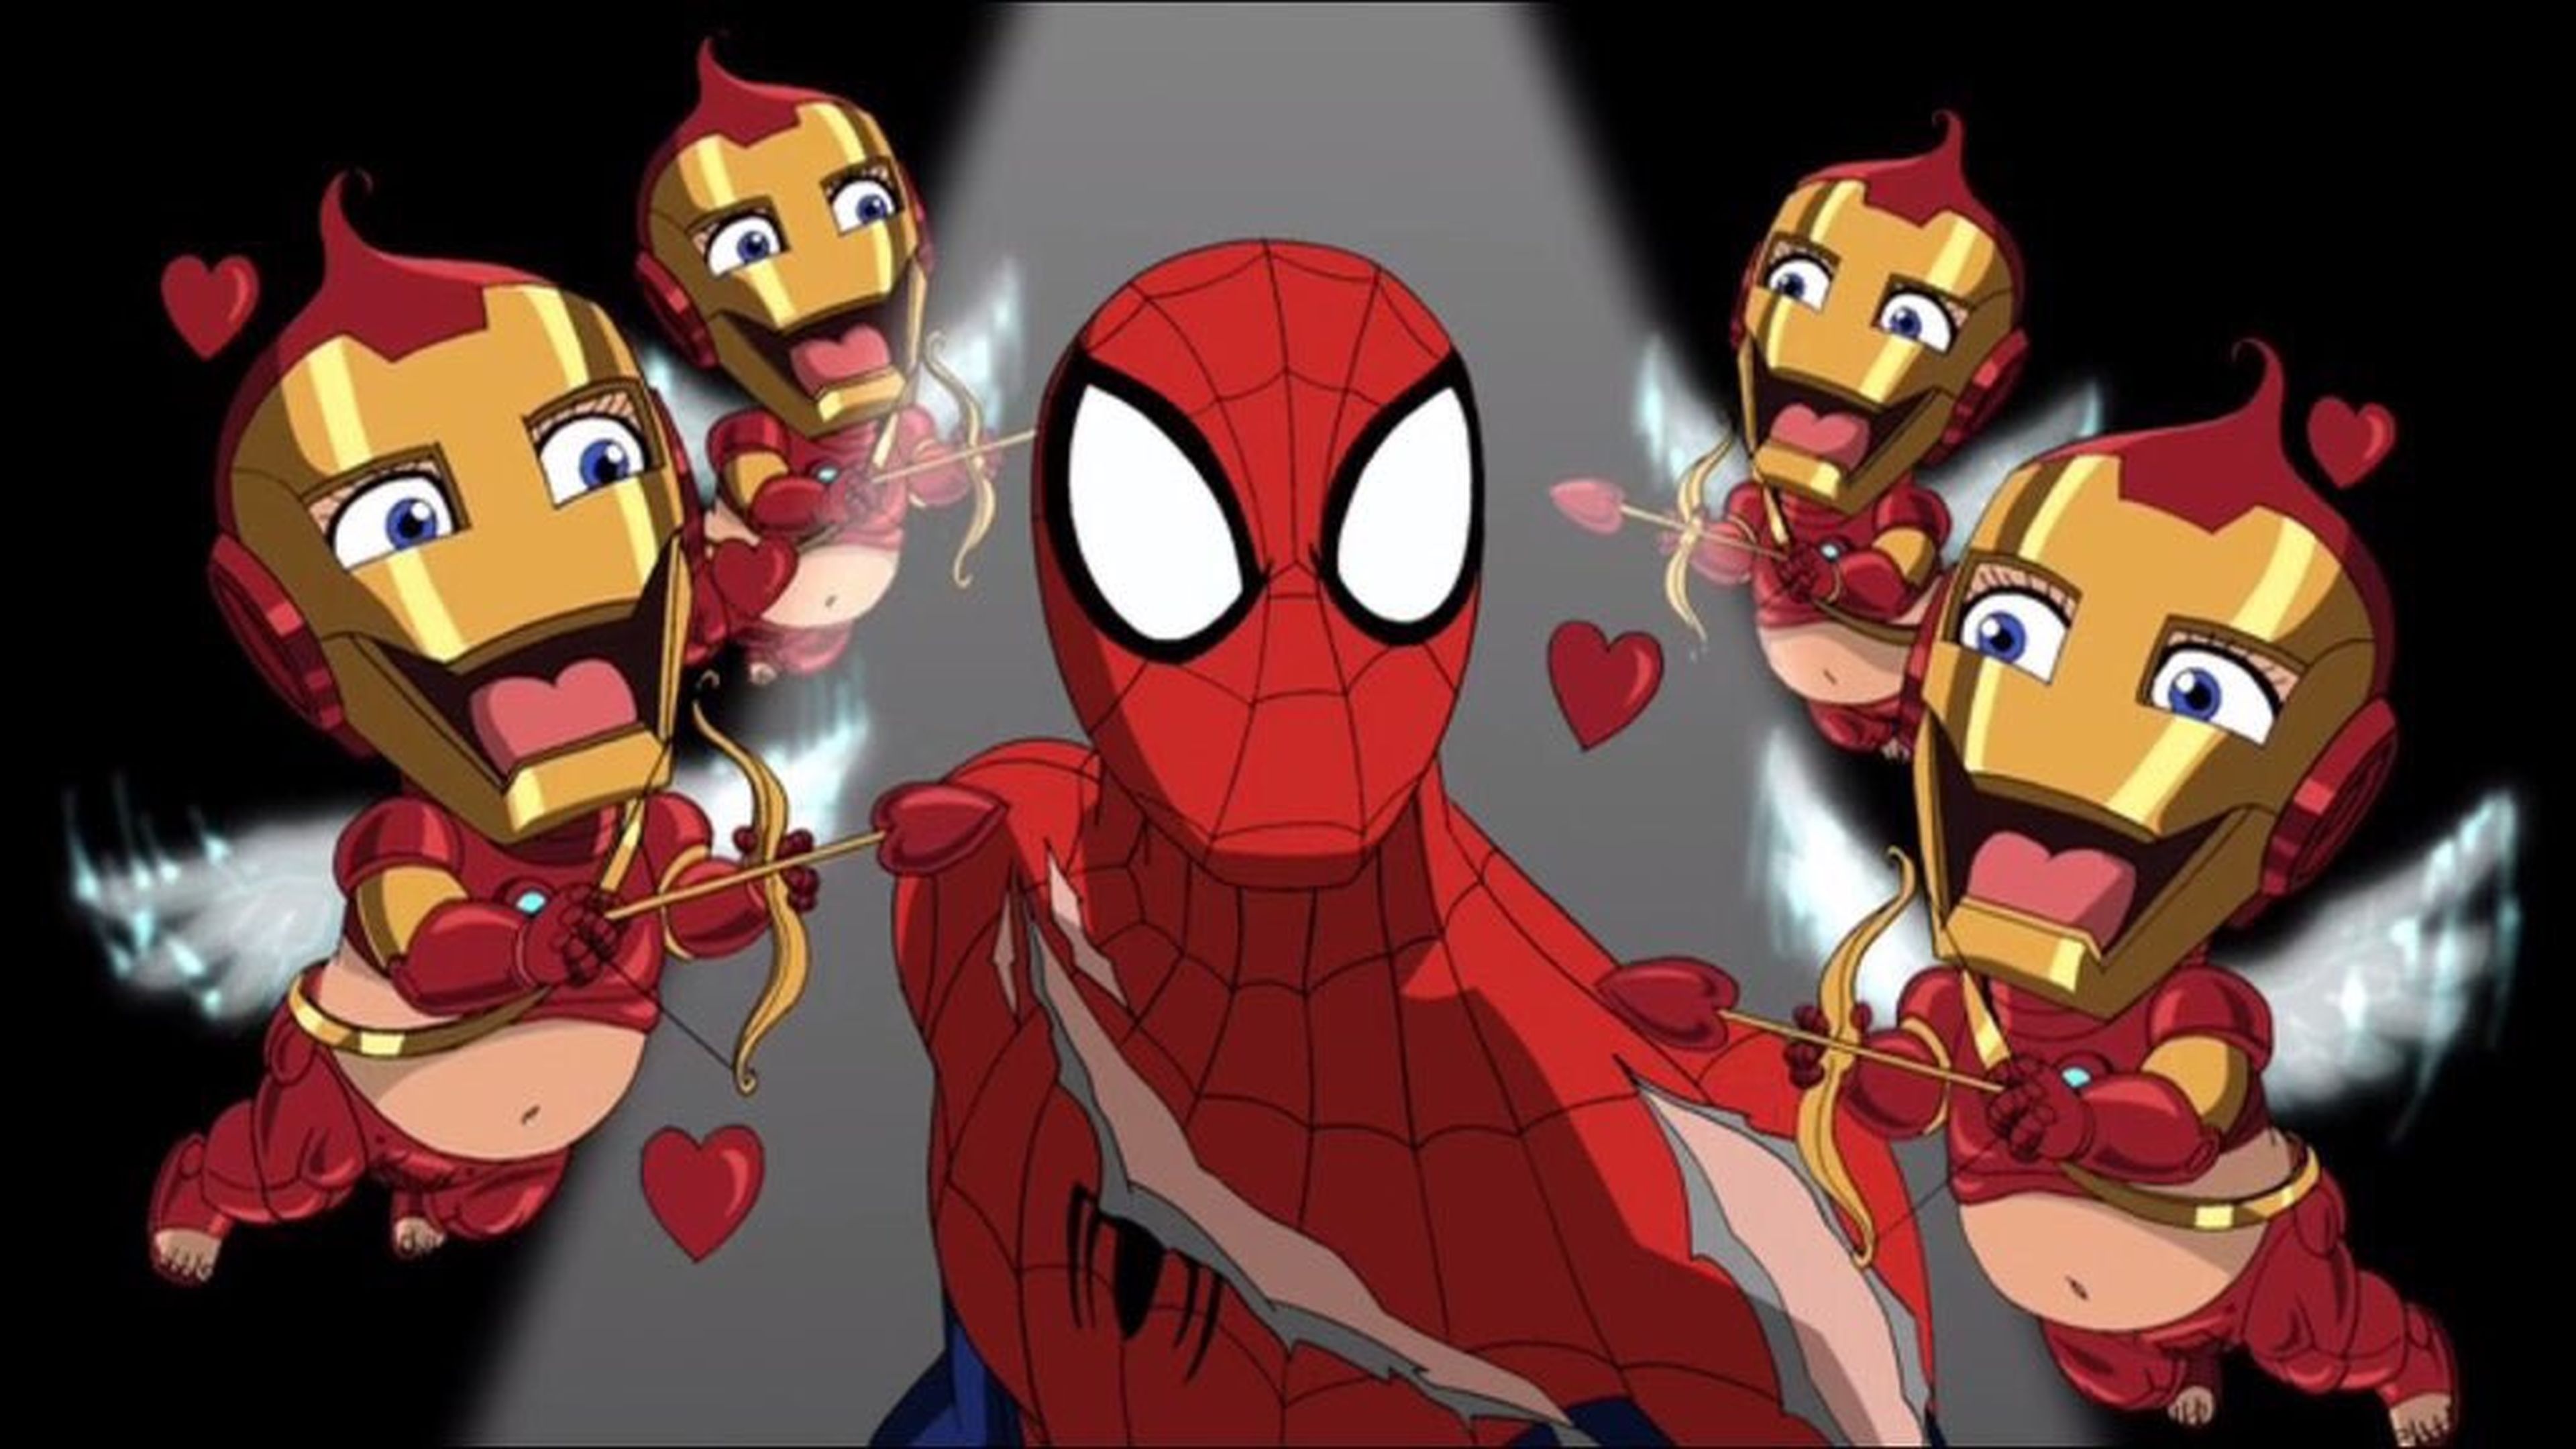 Spider-Man: Homecoming - Robert Downey Jr se une al reparto